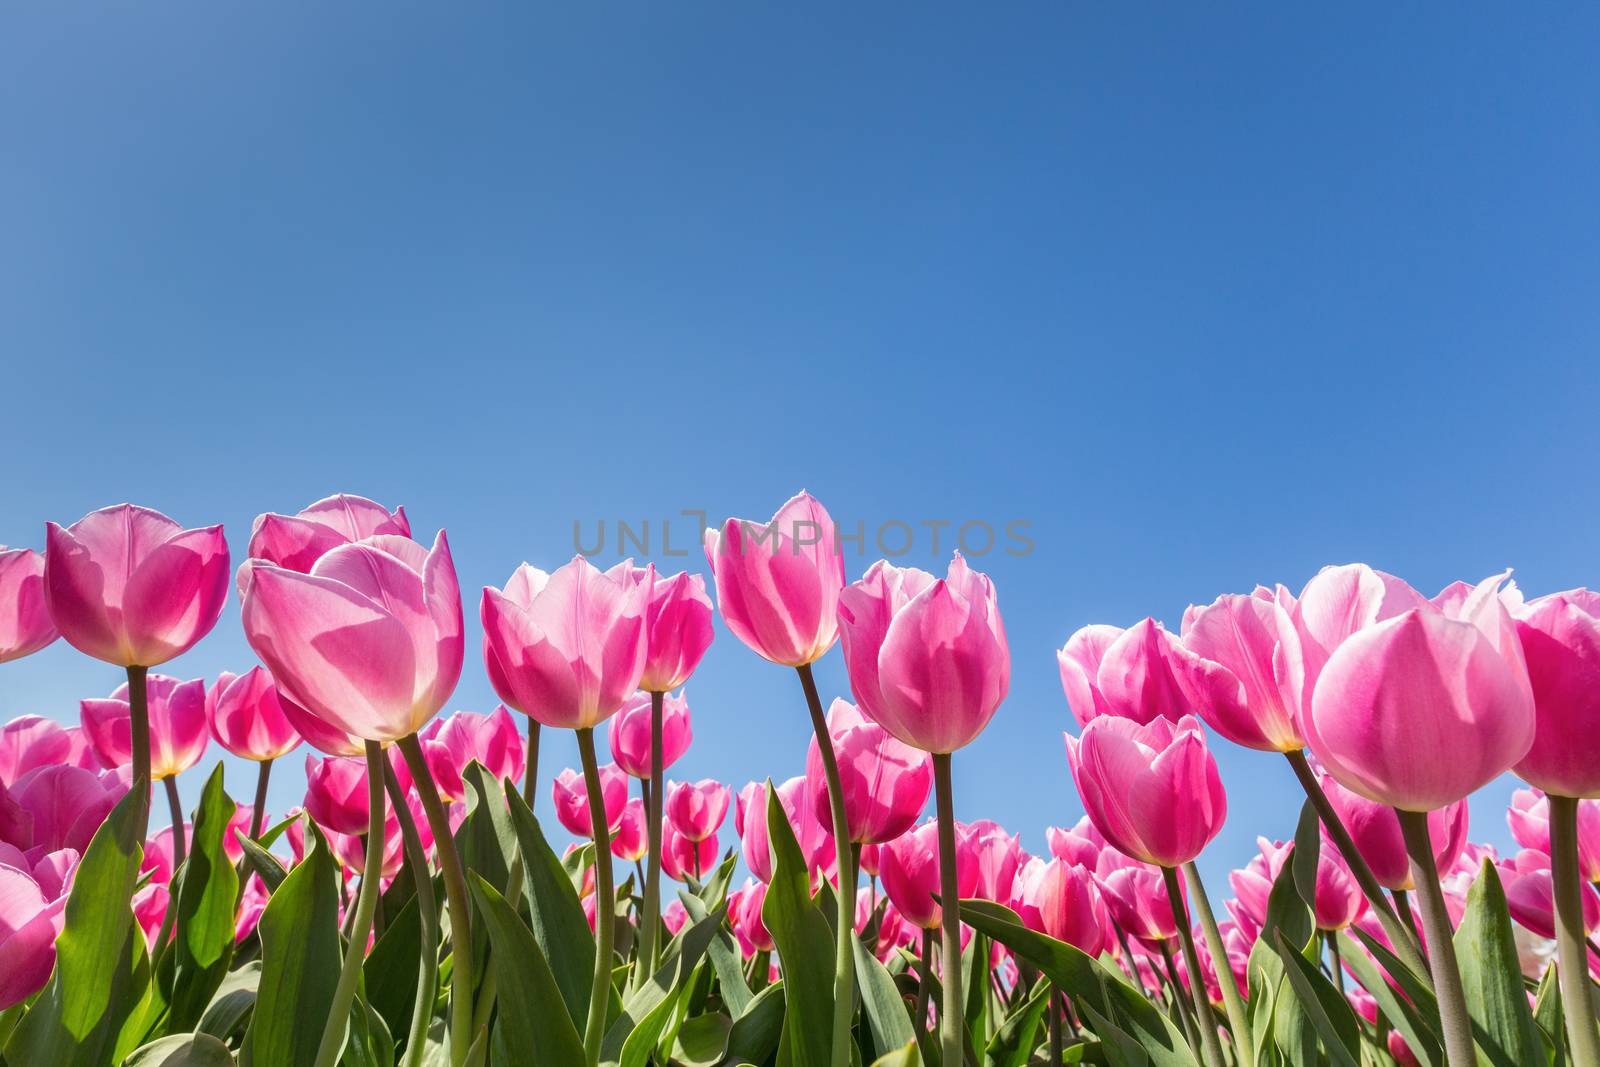 Blooming pink tulips in flowers field with blue sky in spring season